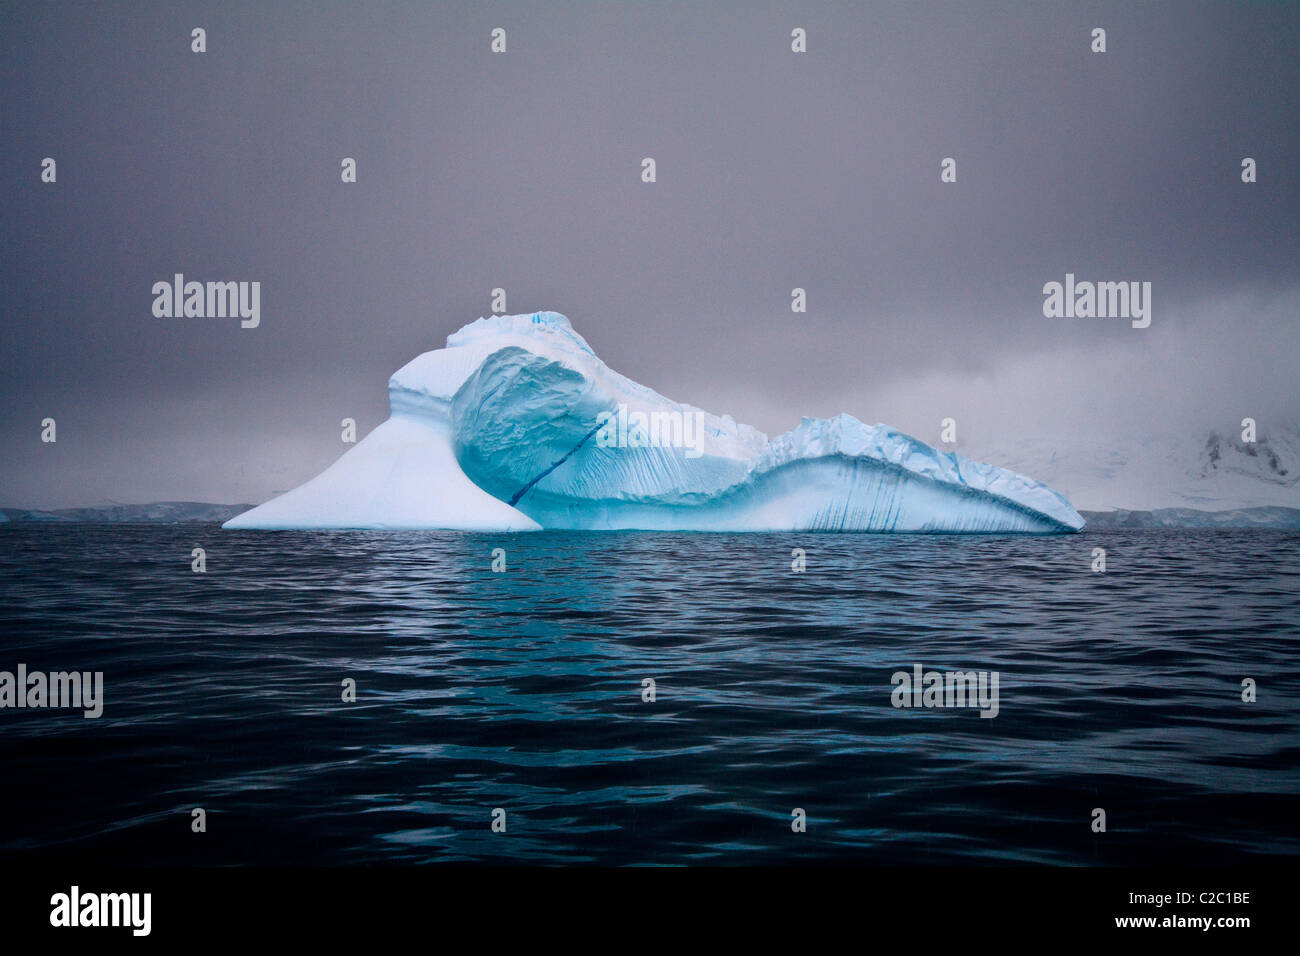 An iridescent iceberg floating in a dark sea beneath stormy skies. Stock Photo